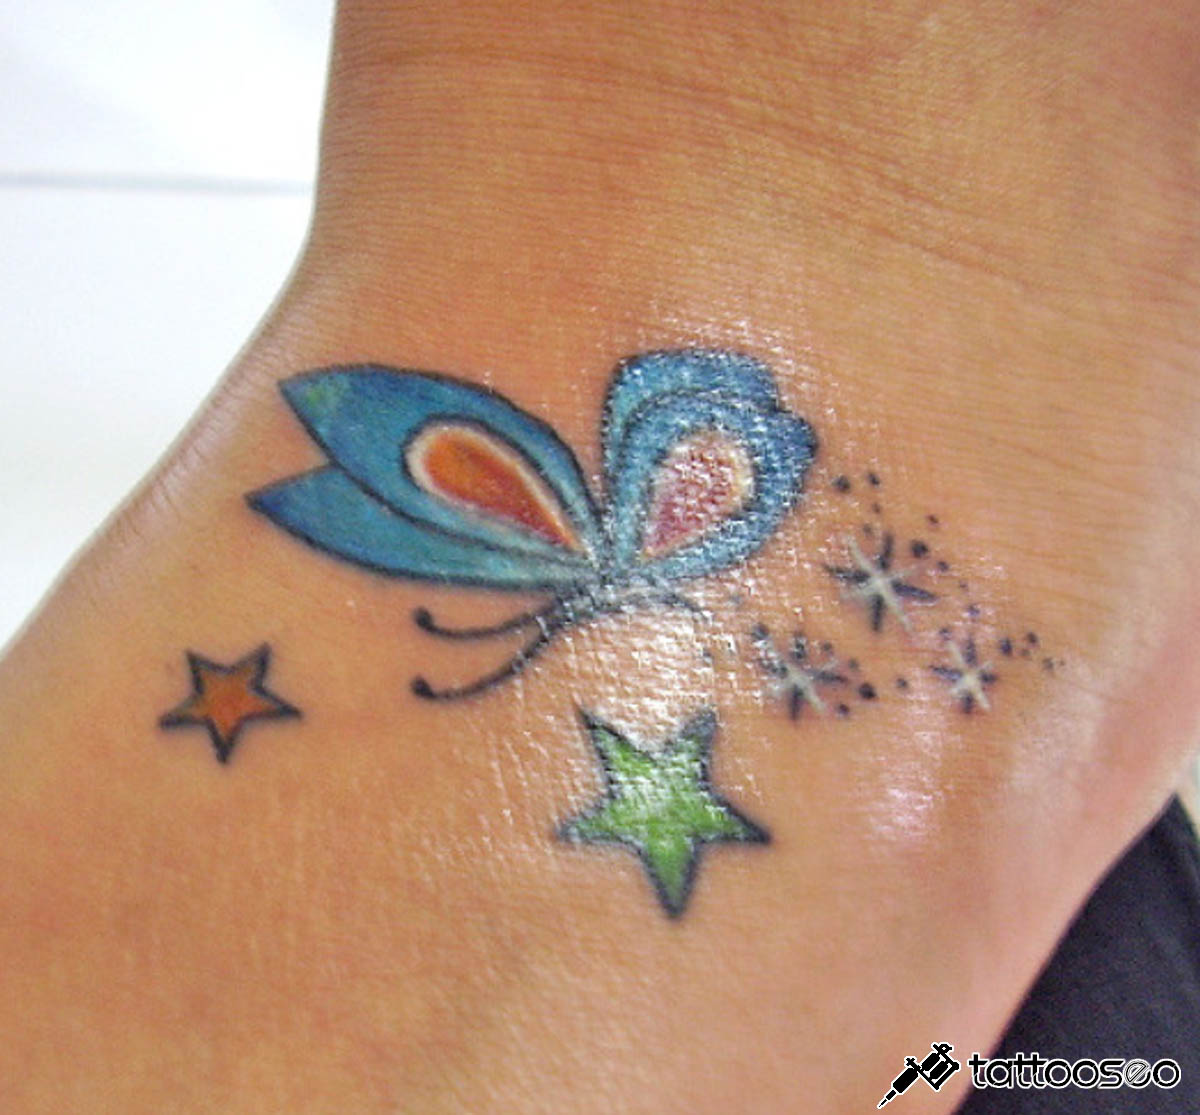 Blue butterfly tattoo